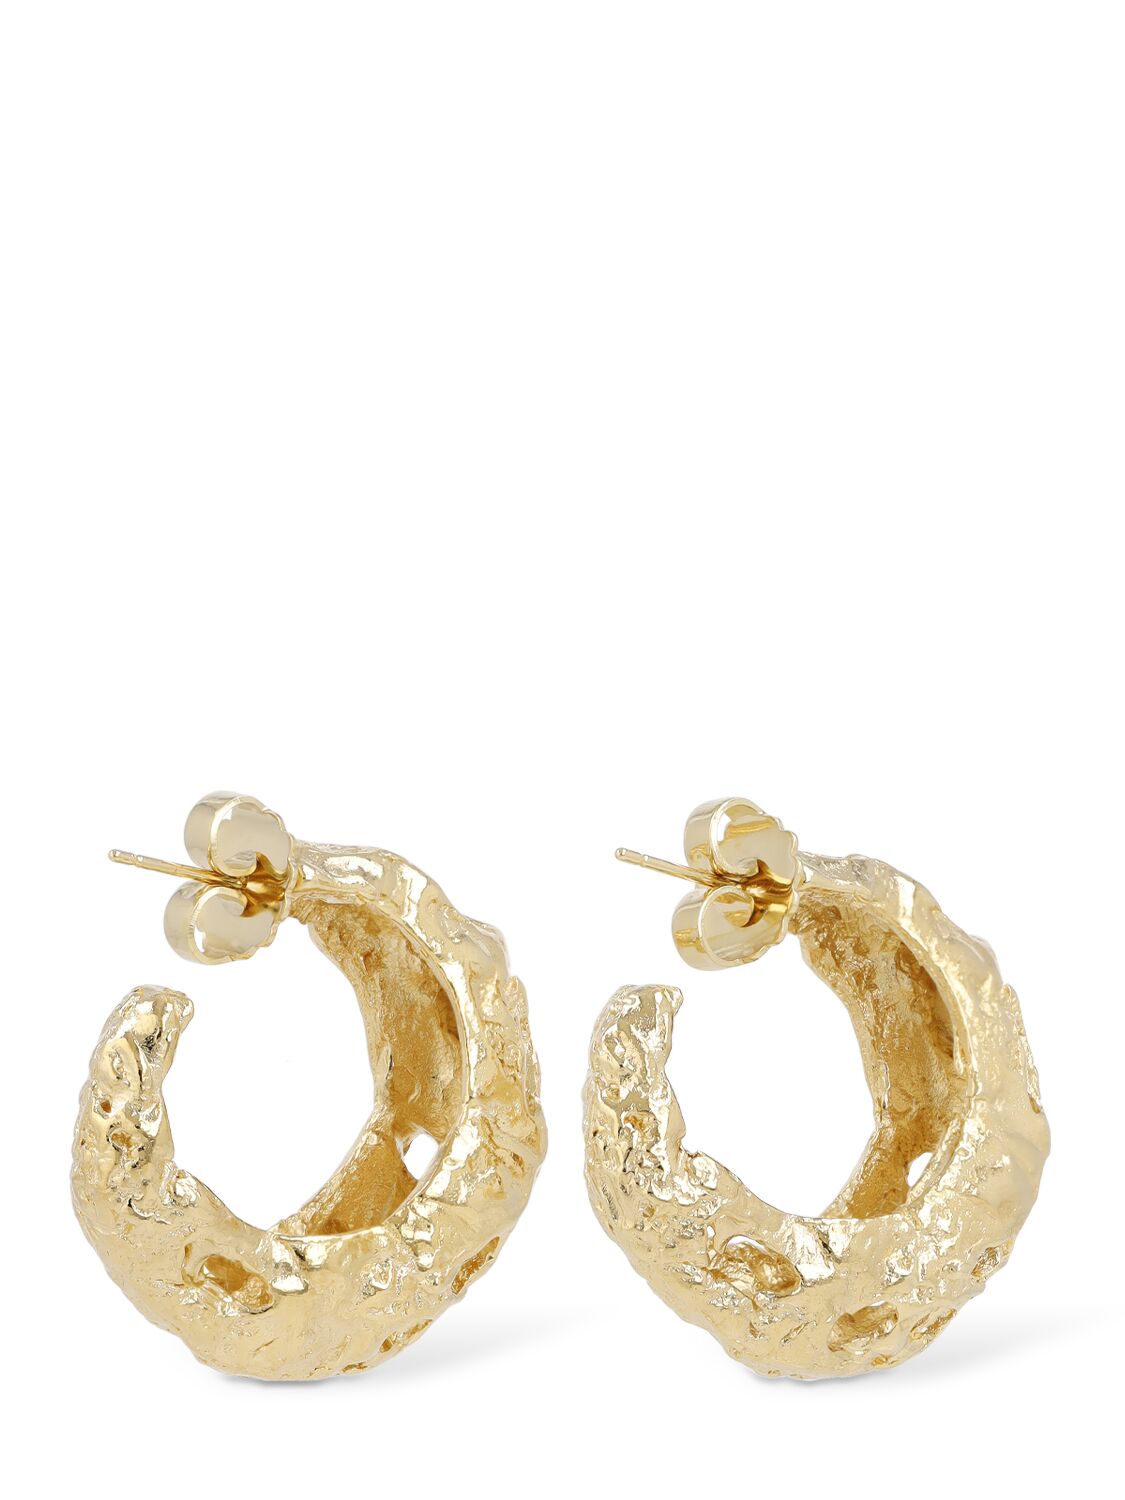 Paola Sighinolfi Vara hoops earrings - Gold